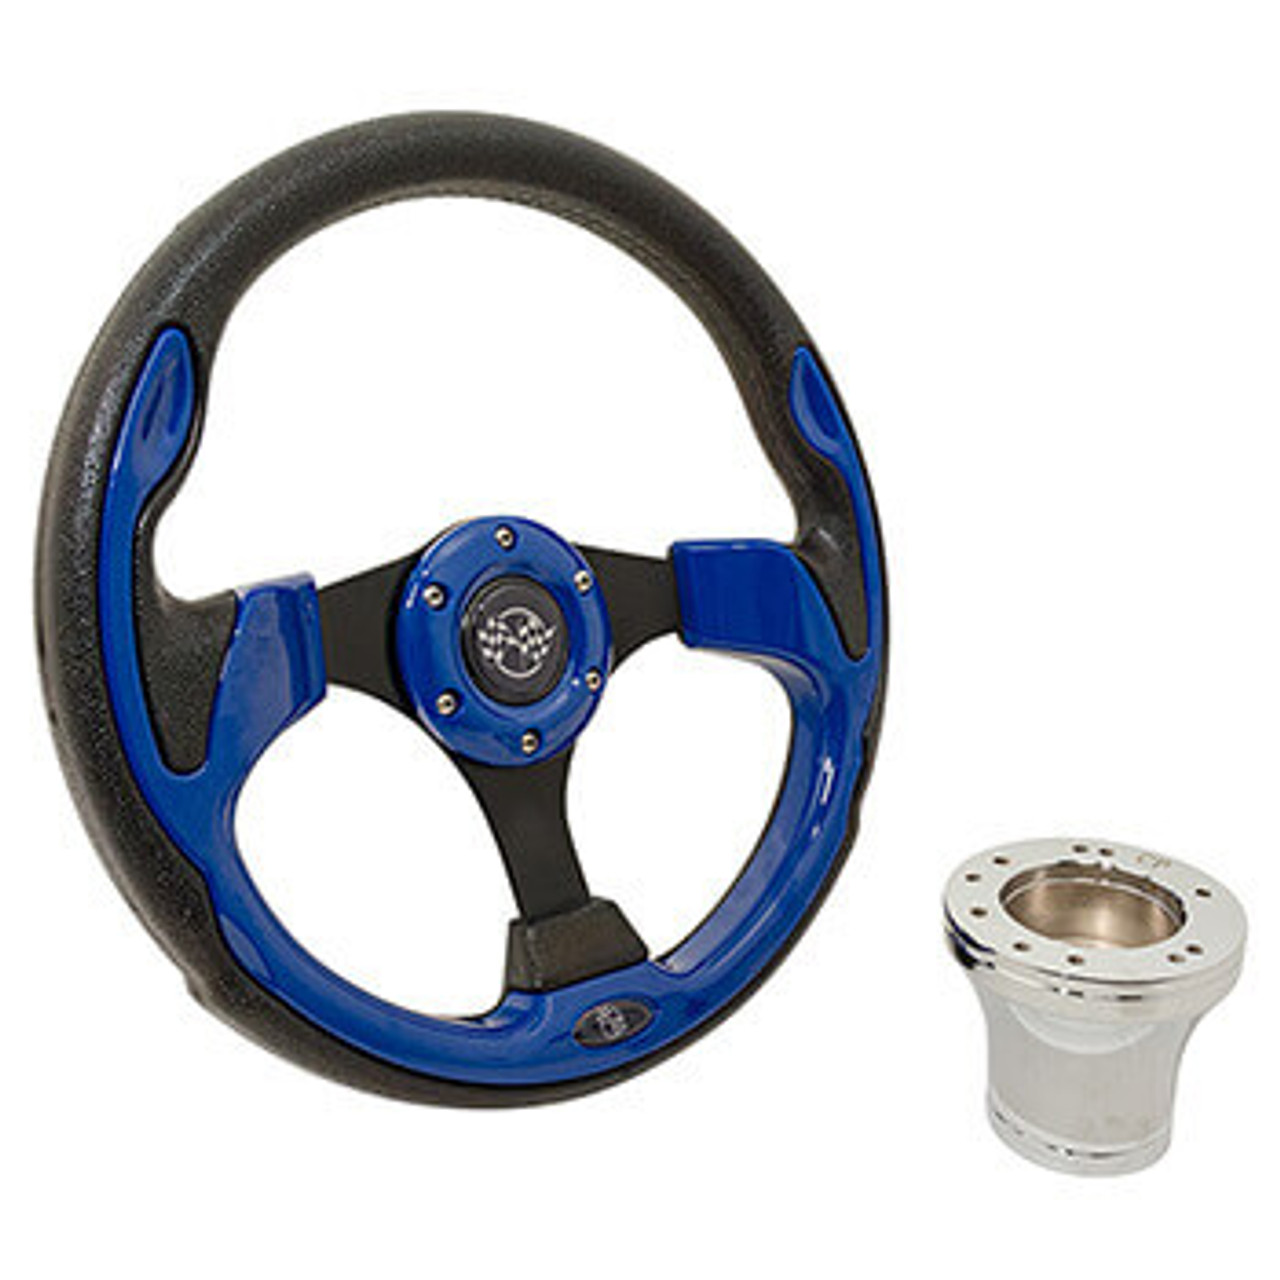 Blue Rally 12.5" Steering Wheel for Yamaha G16-Drive2 Golf Cart, 06-036